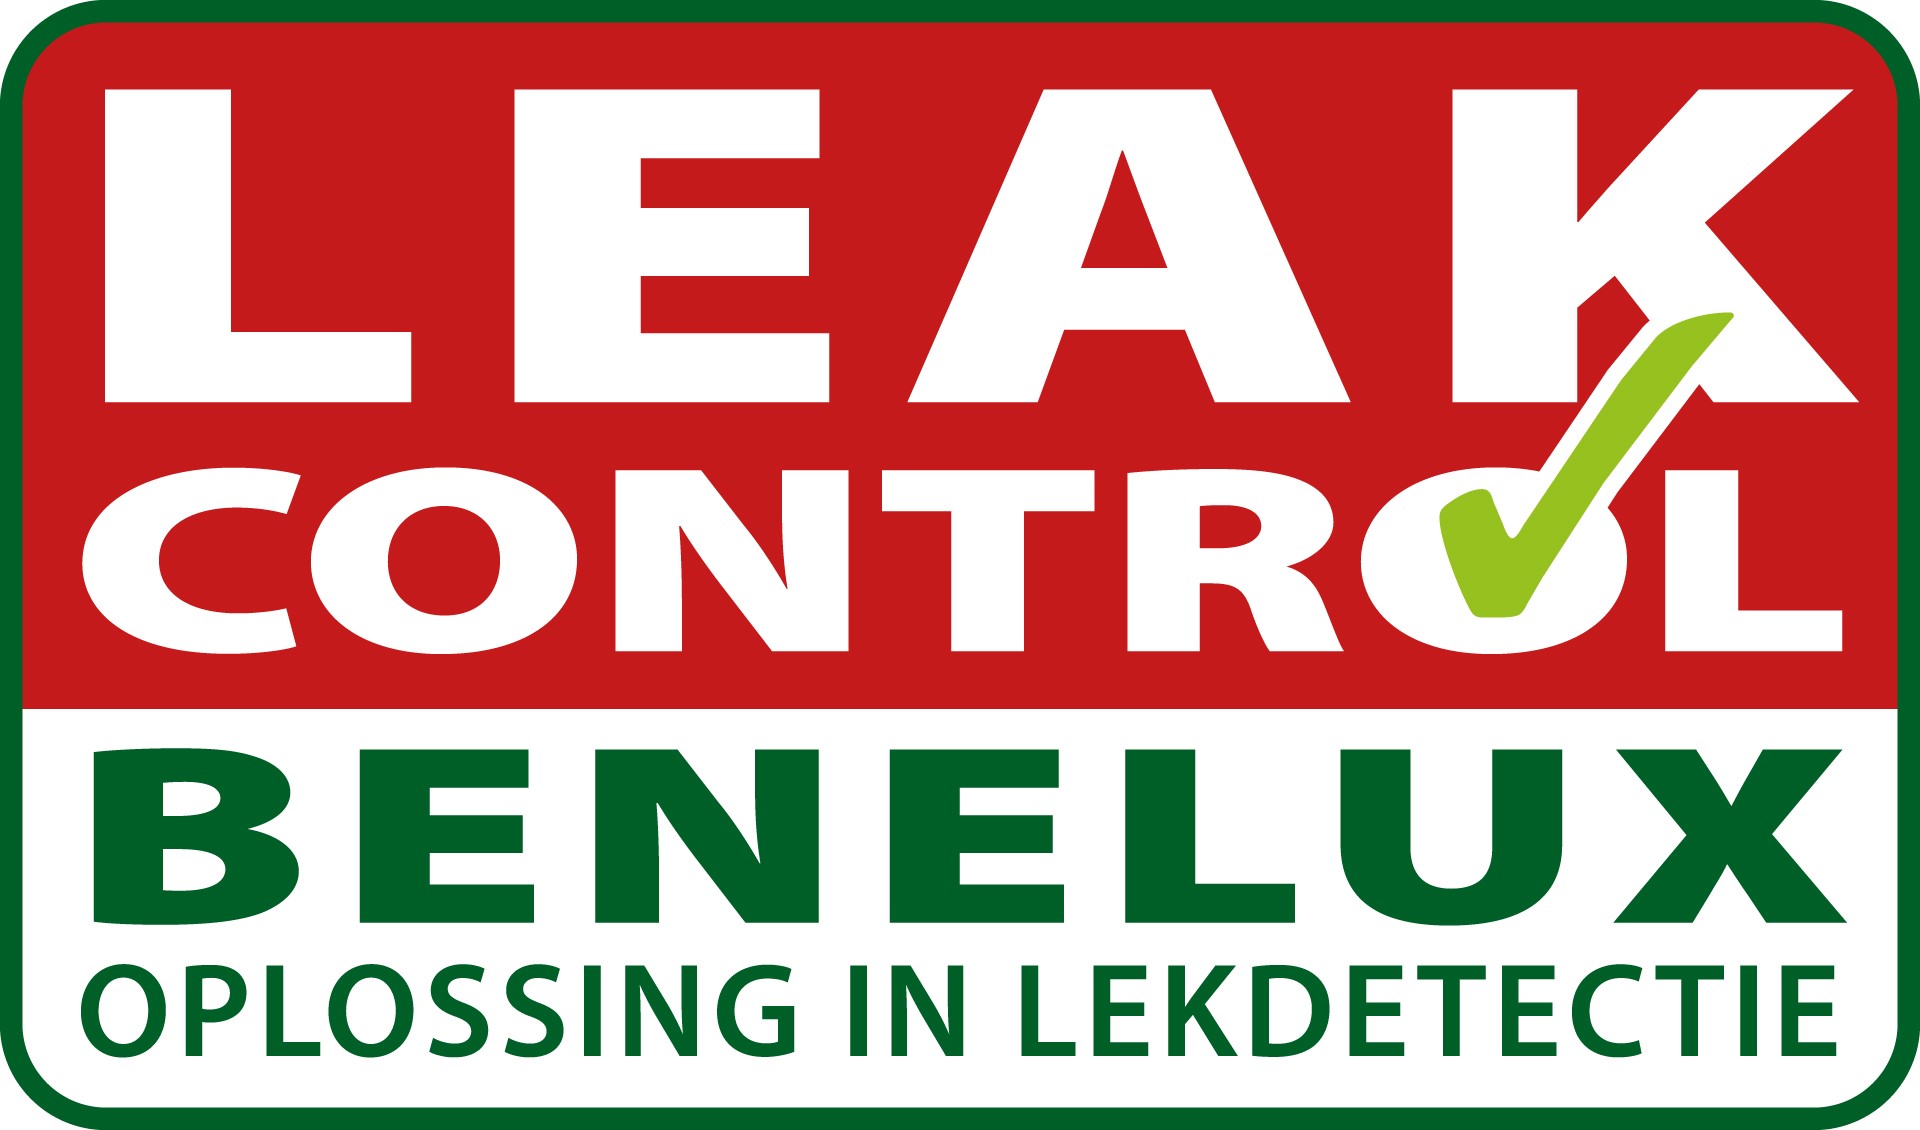 leak-control-benelux